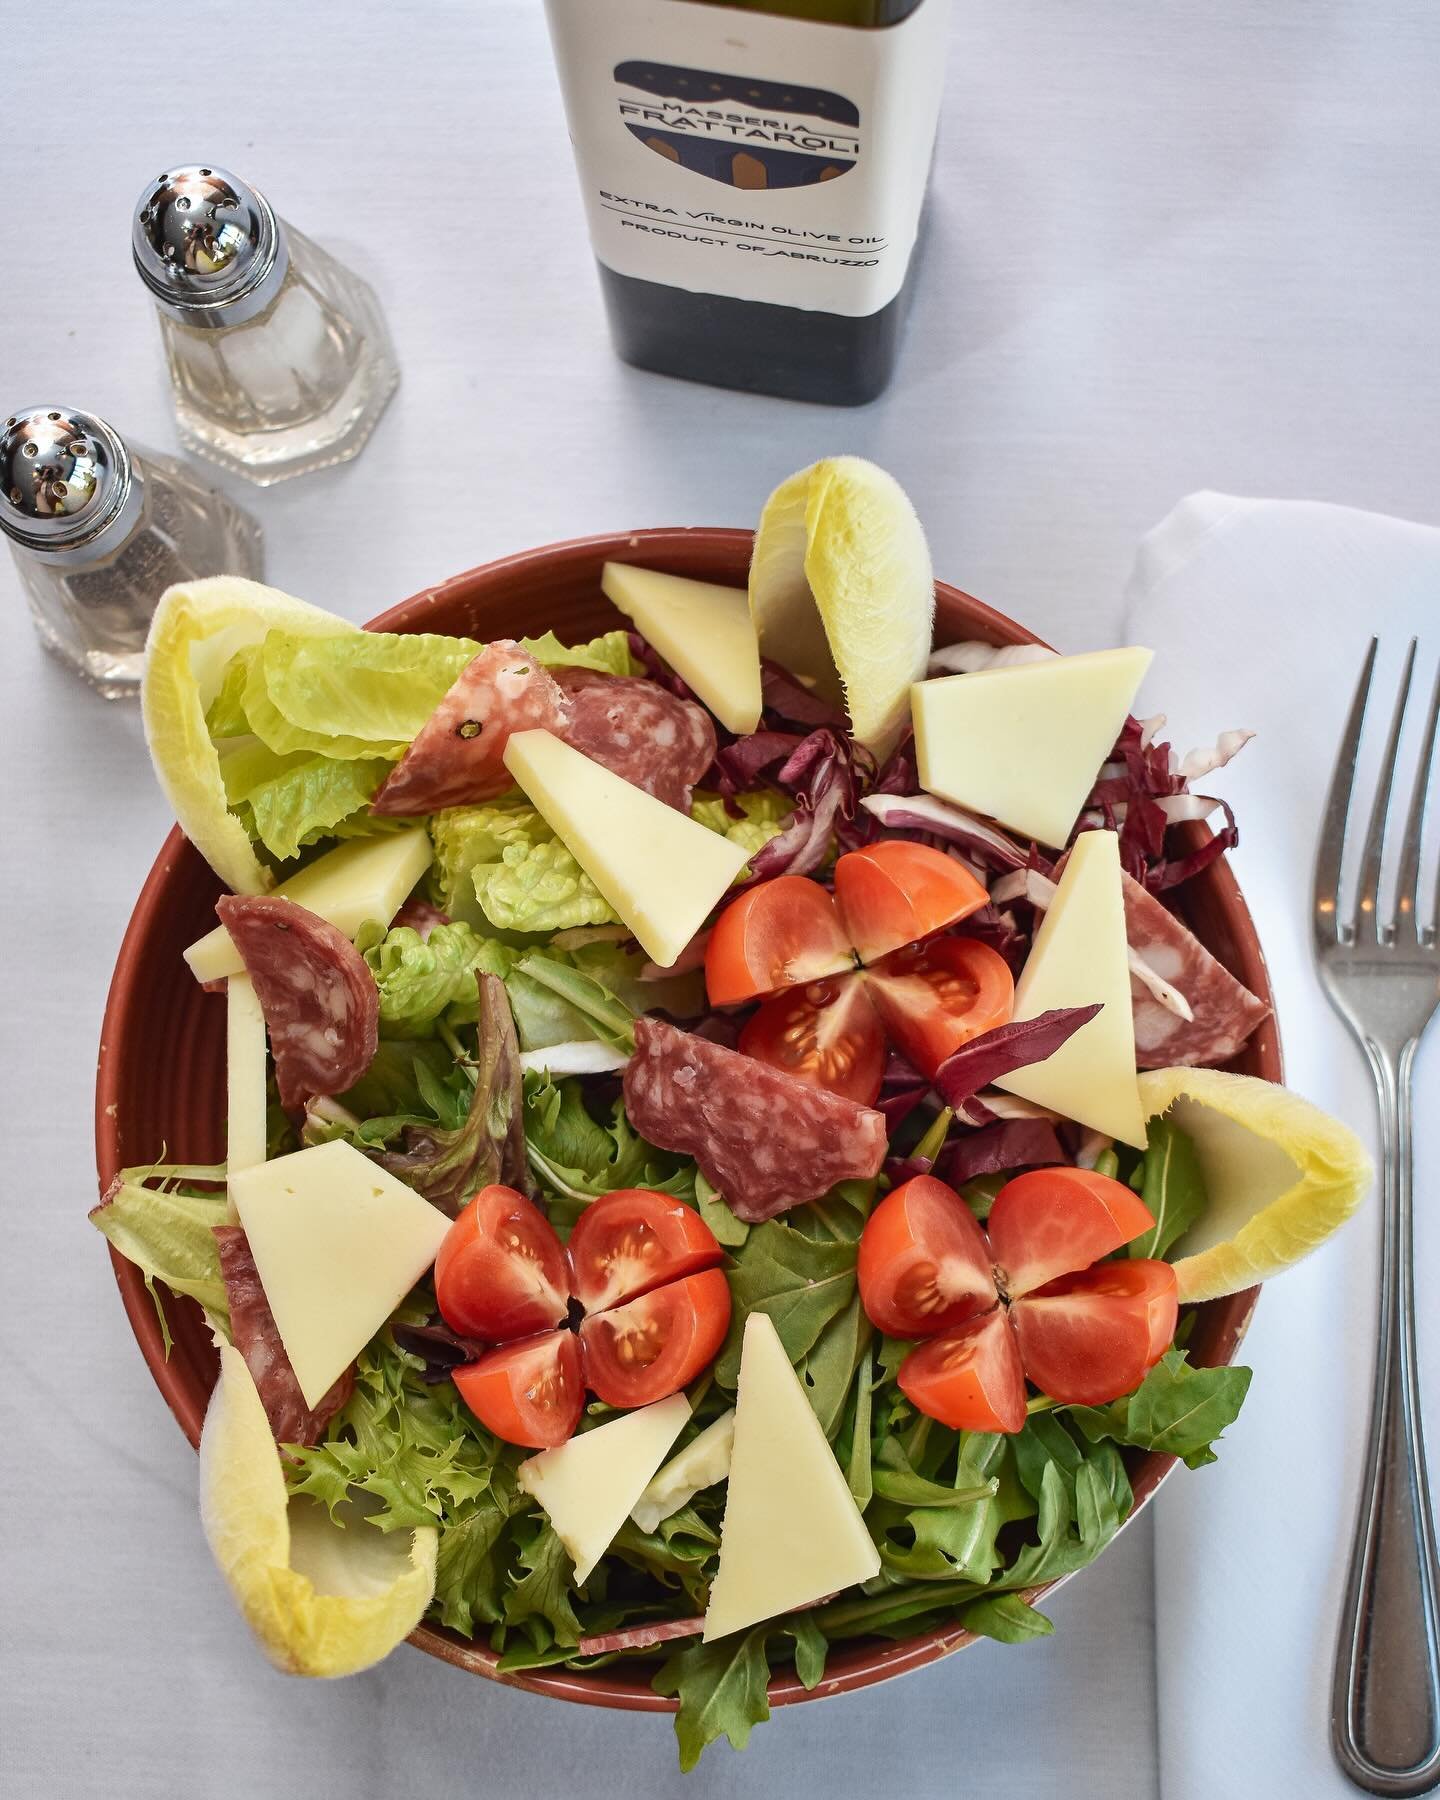 We're finally ready to enjoy some fresh summer dishes 🥗☀️

#salad #Italianfood #restaurant #wheretoeat